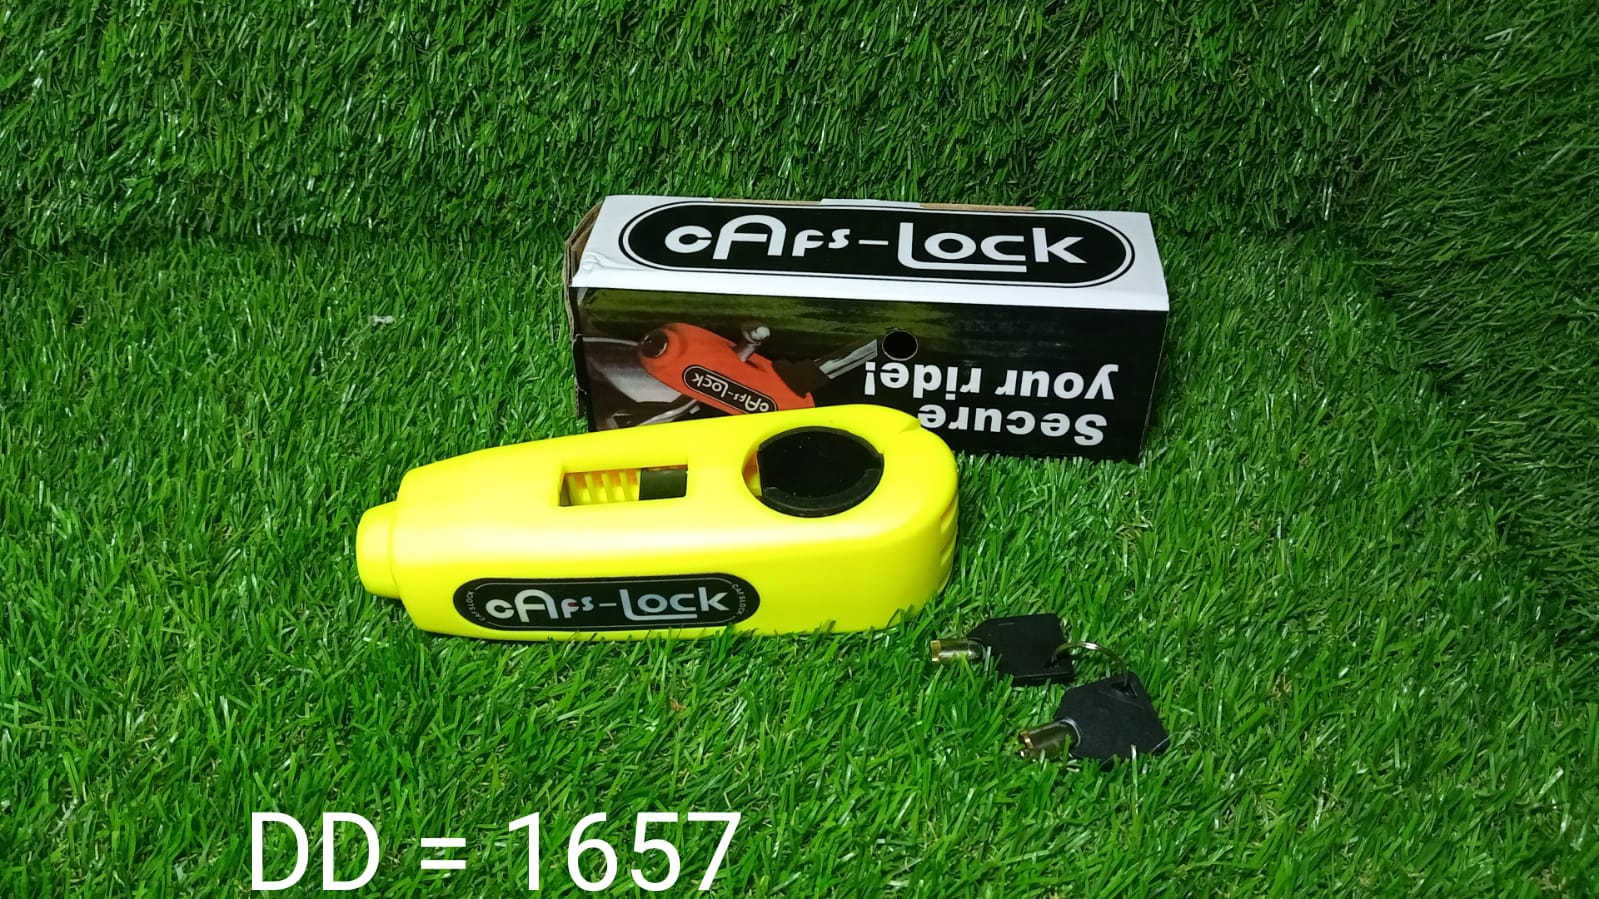 1657 Heavy Duty Bike Brake Lock - Locking System by Holding Handle Bar with Brake Lever 